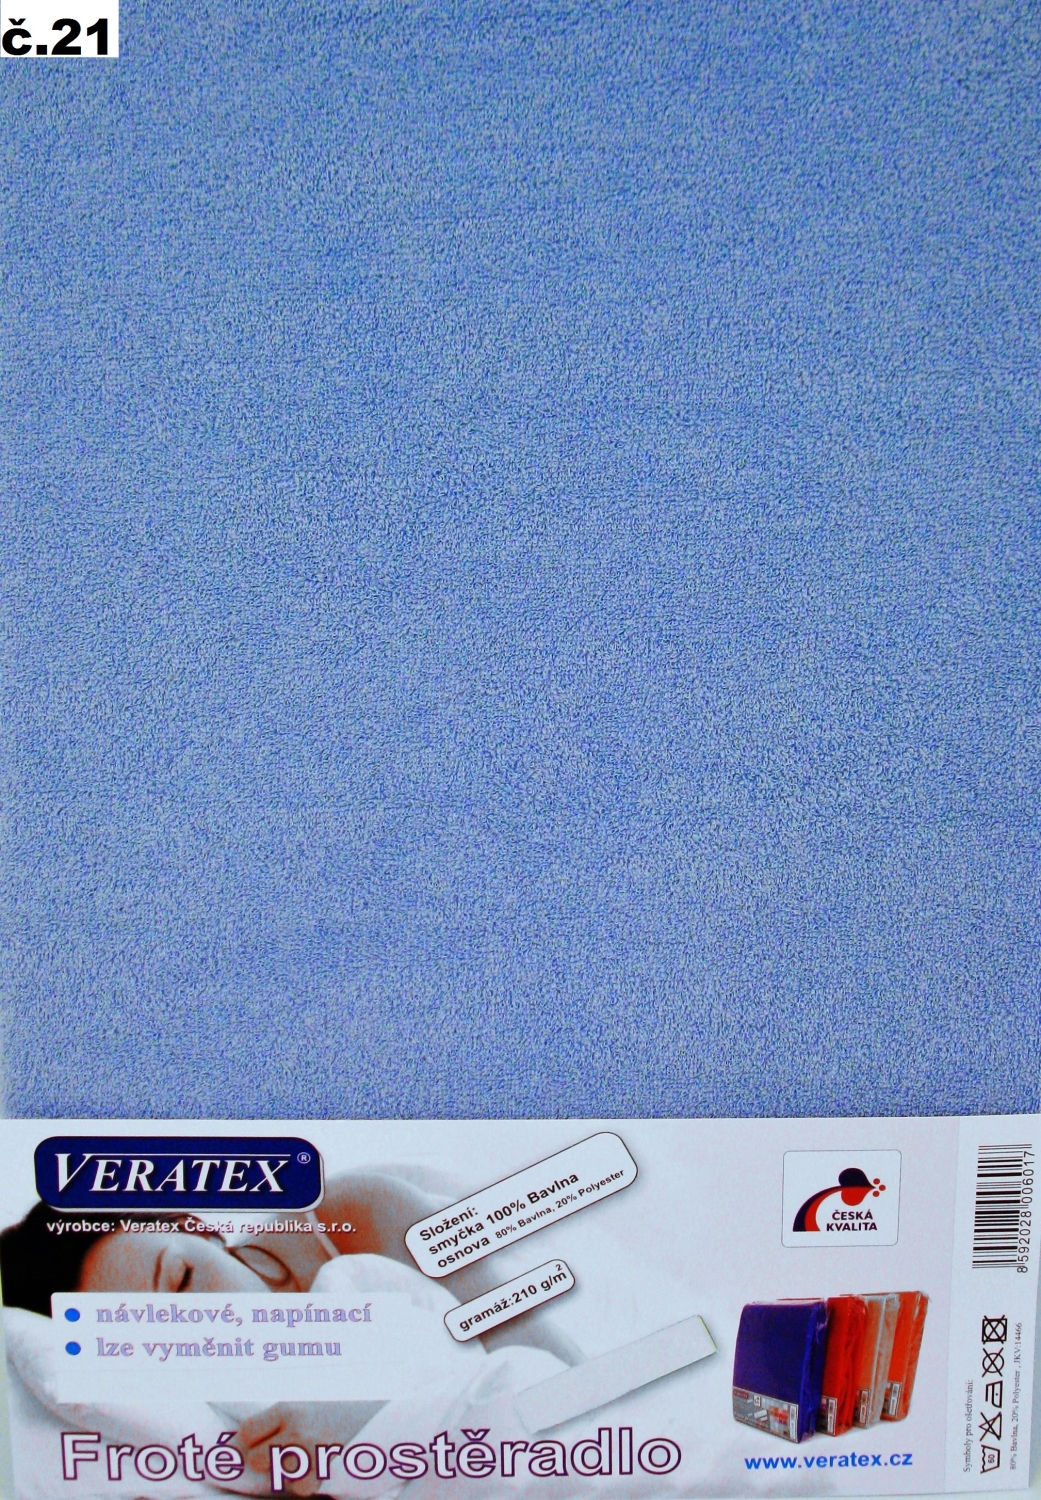 Veratex Froté prostěradlo 90x220cm (č.21-sv.modrá)